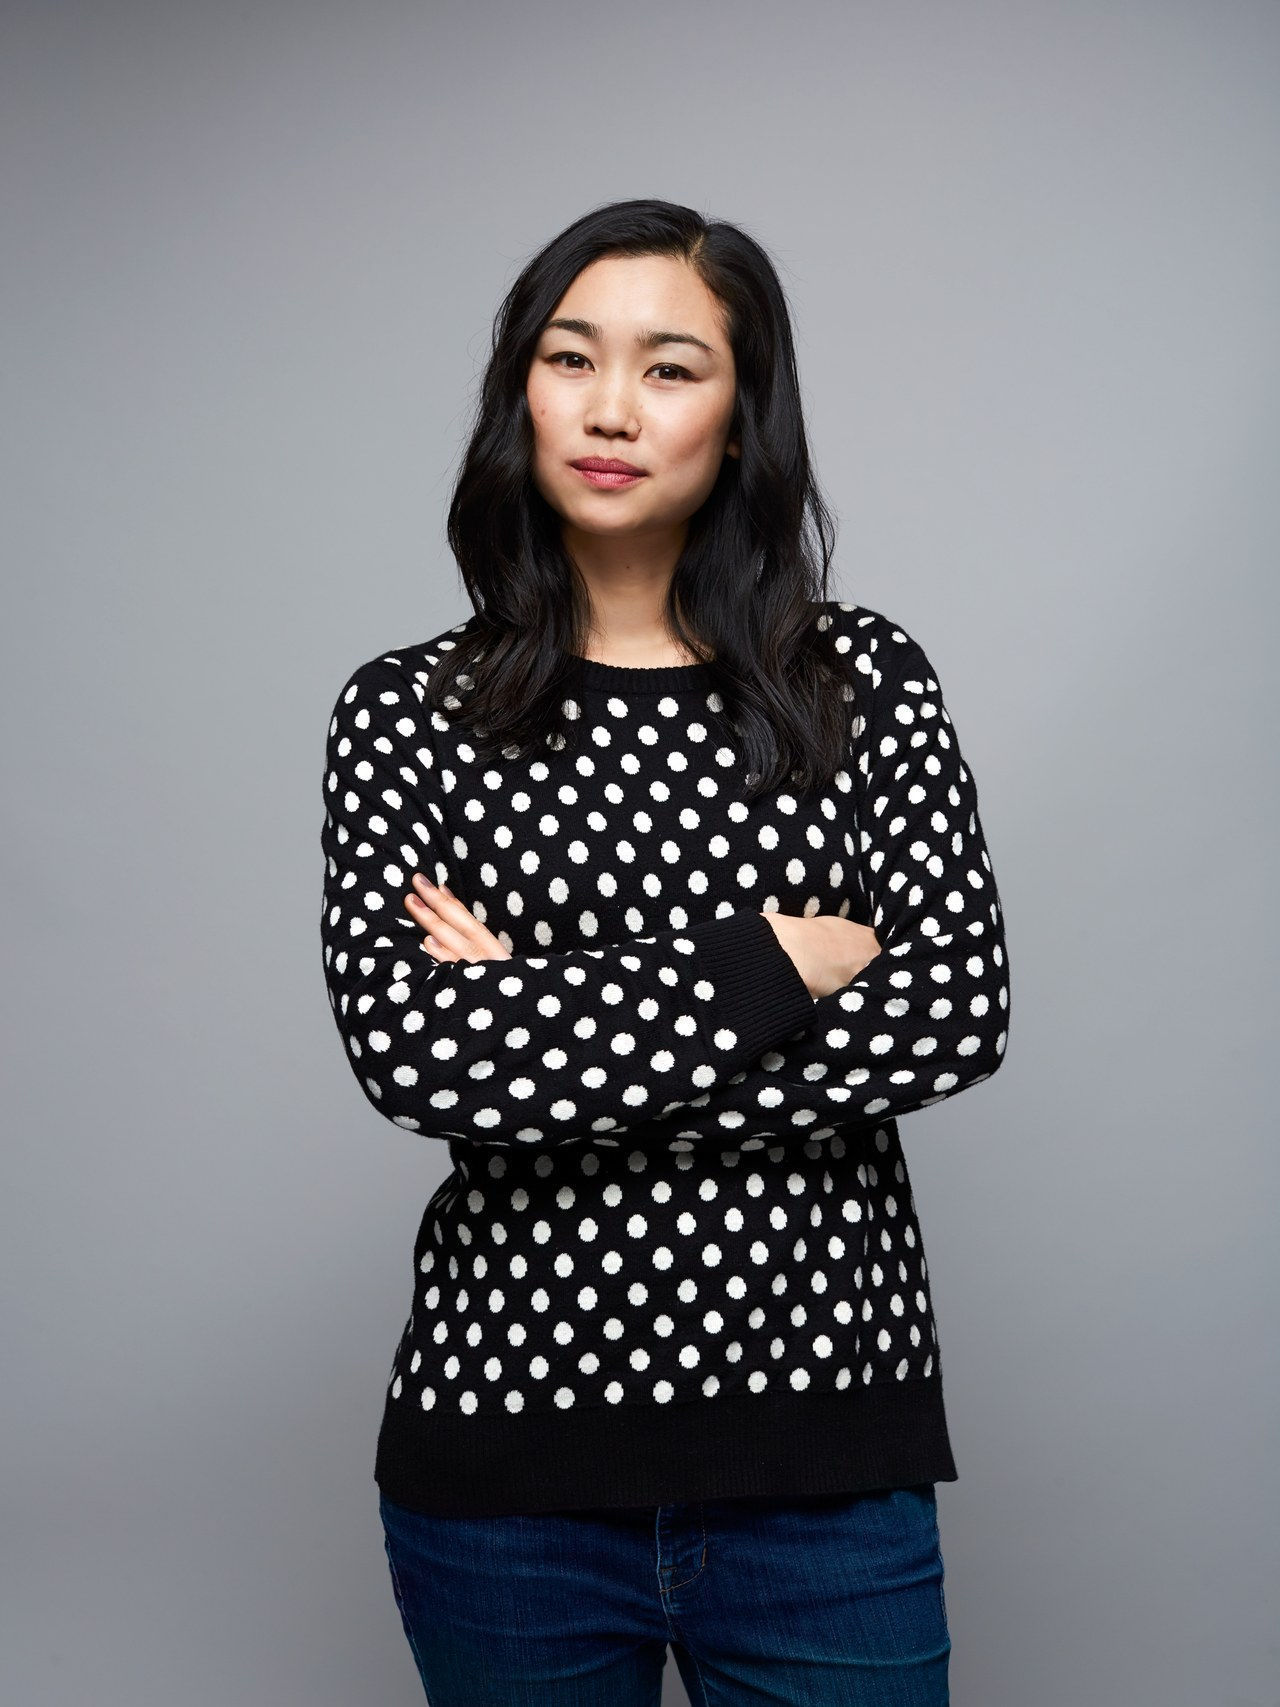 تريسي Chou is fighting for equal pay in tech